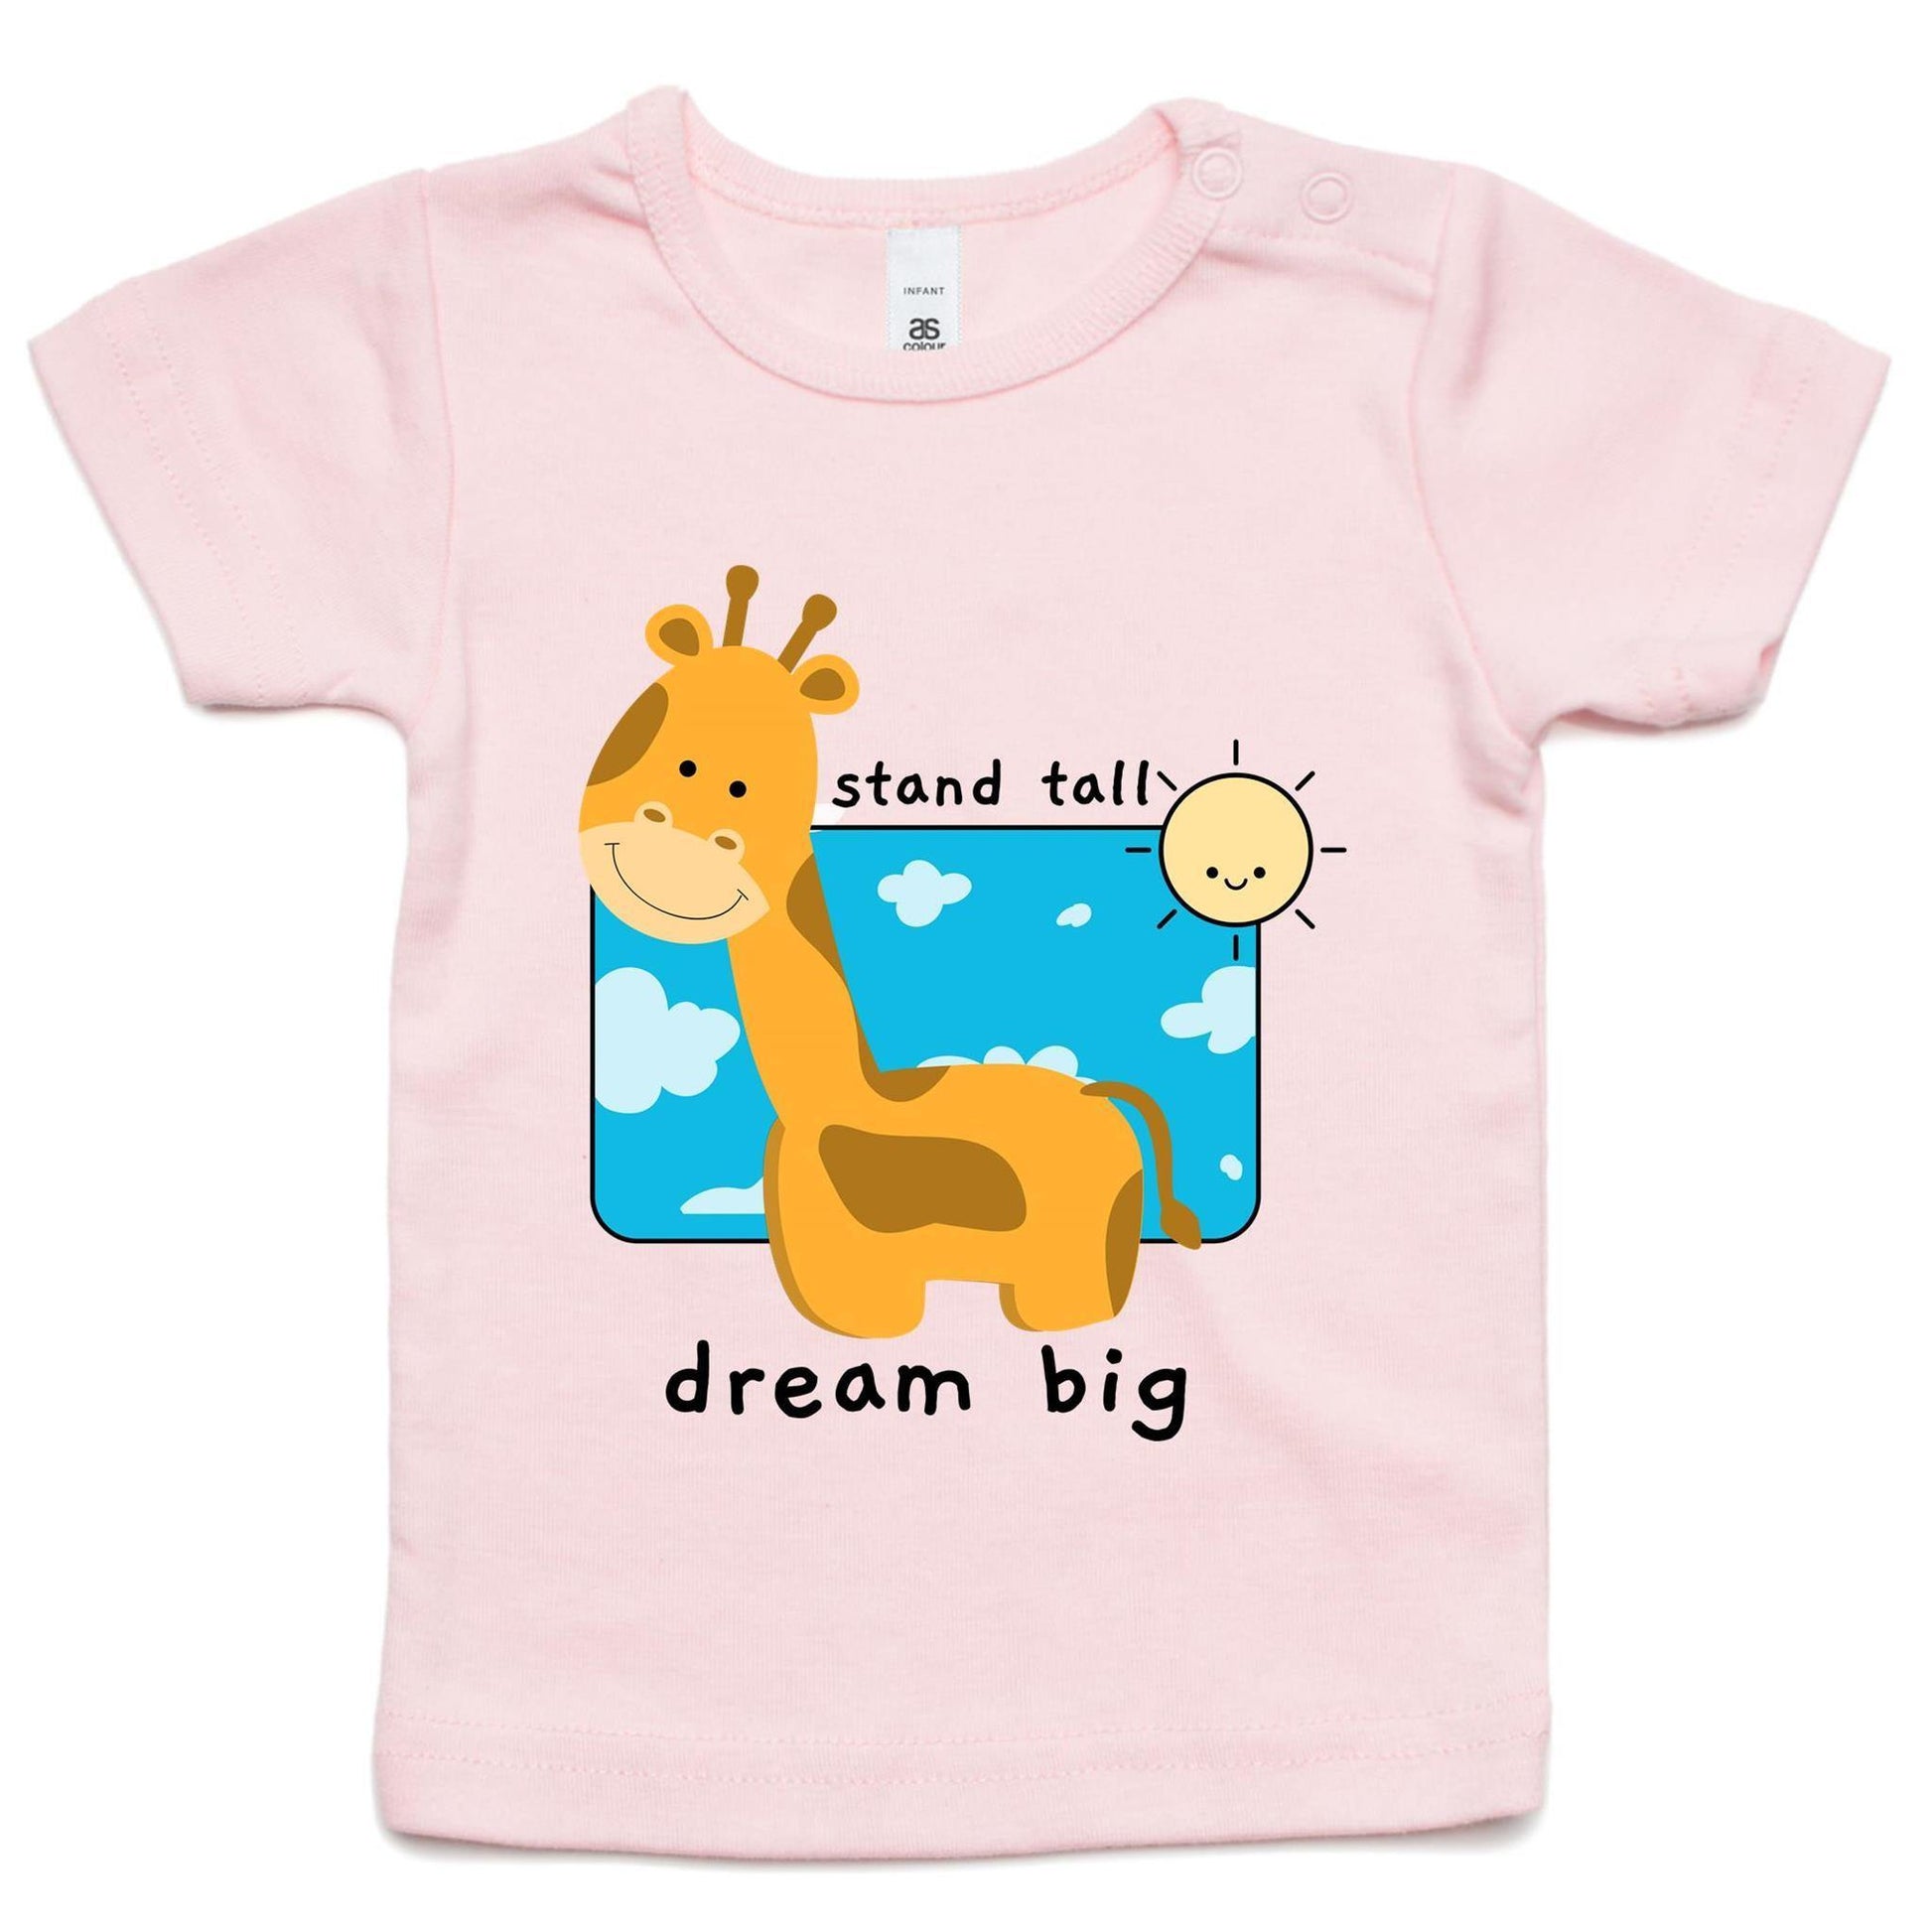 Stand Tall, Dream Big - Baby T-shirt Pink Baby T-shirt animal kids